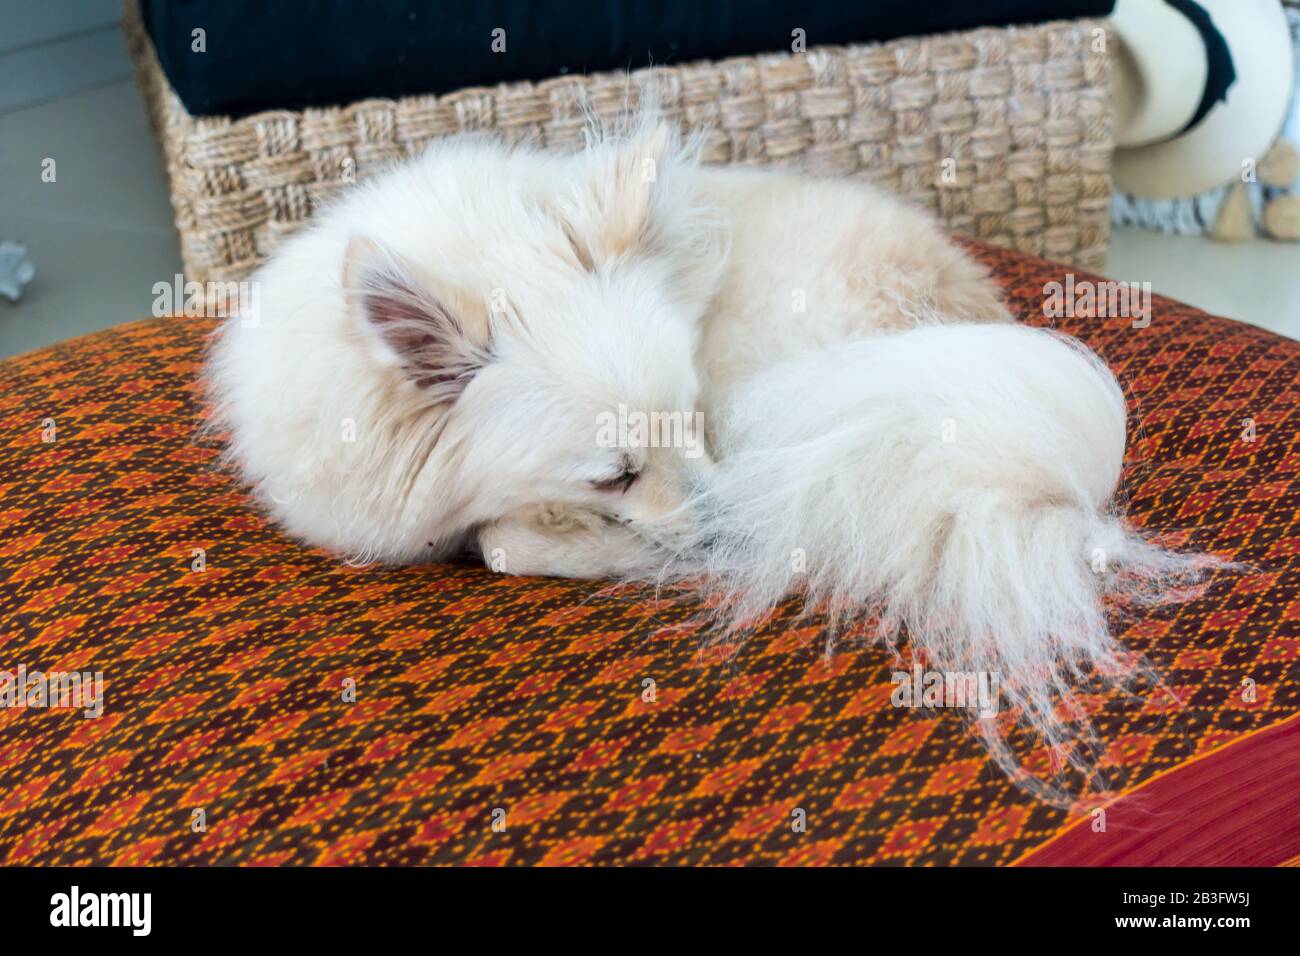 A white Pomeranian asleep on red bedding. Stock Photo